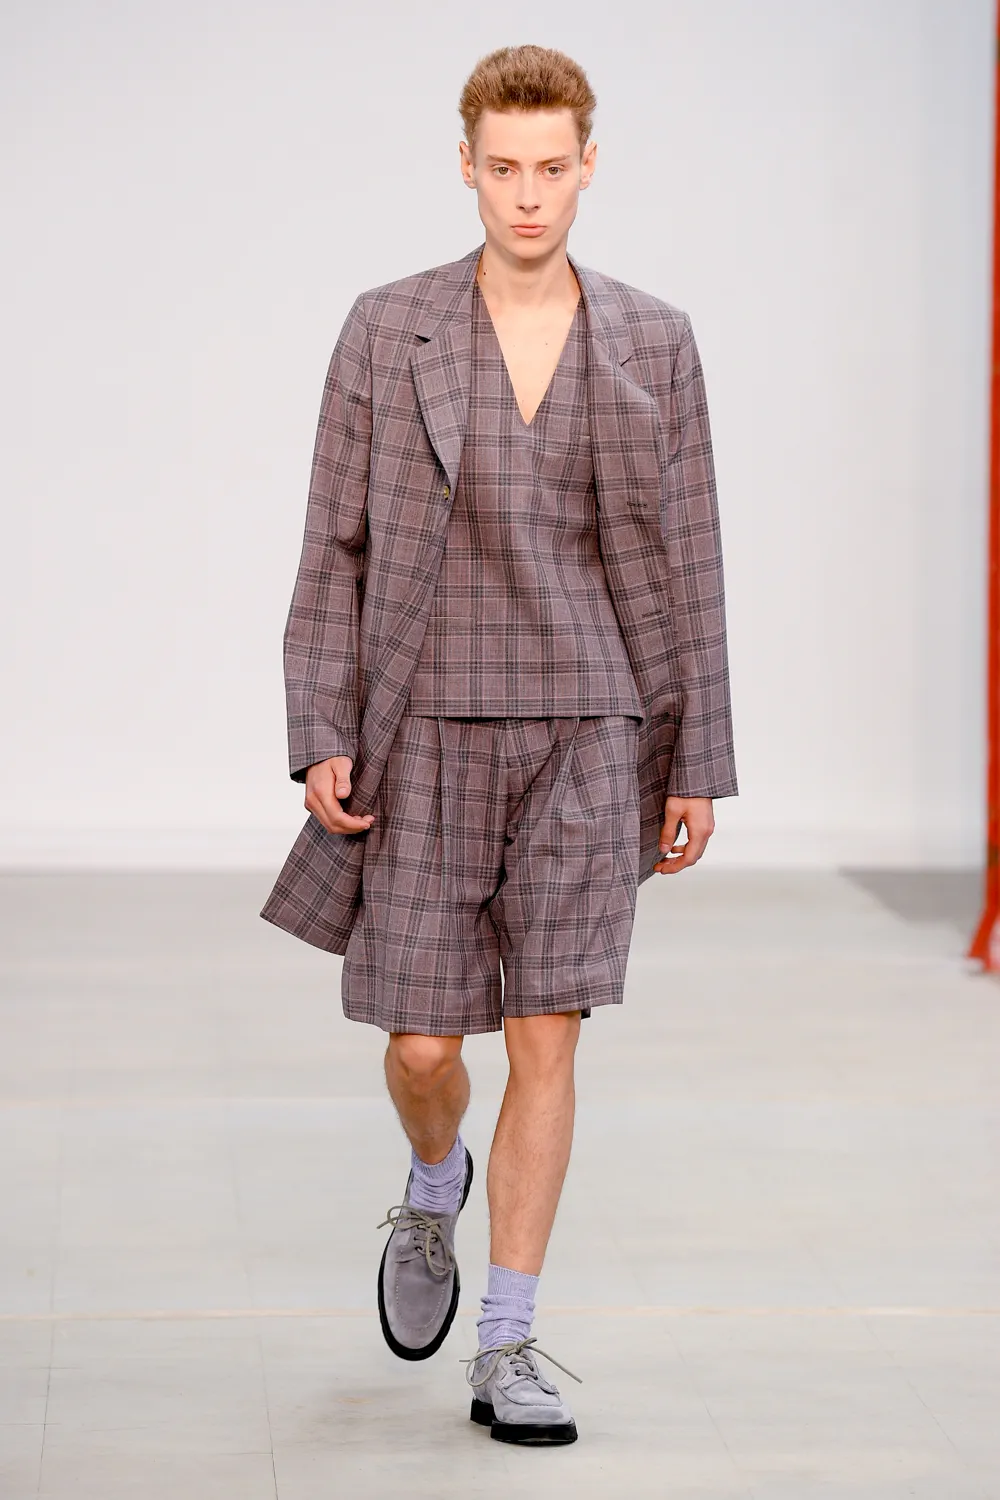 Paul Smith Spring/Summer 2023 - Paris Fashion Week Men’s